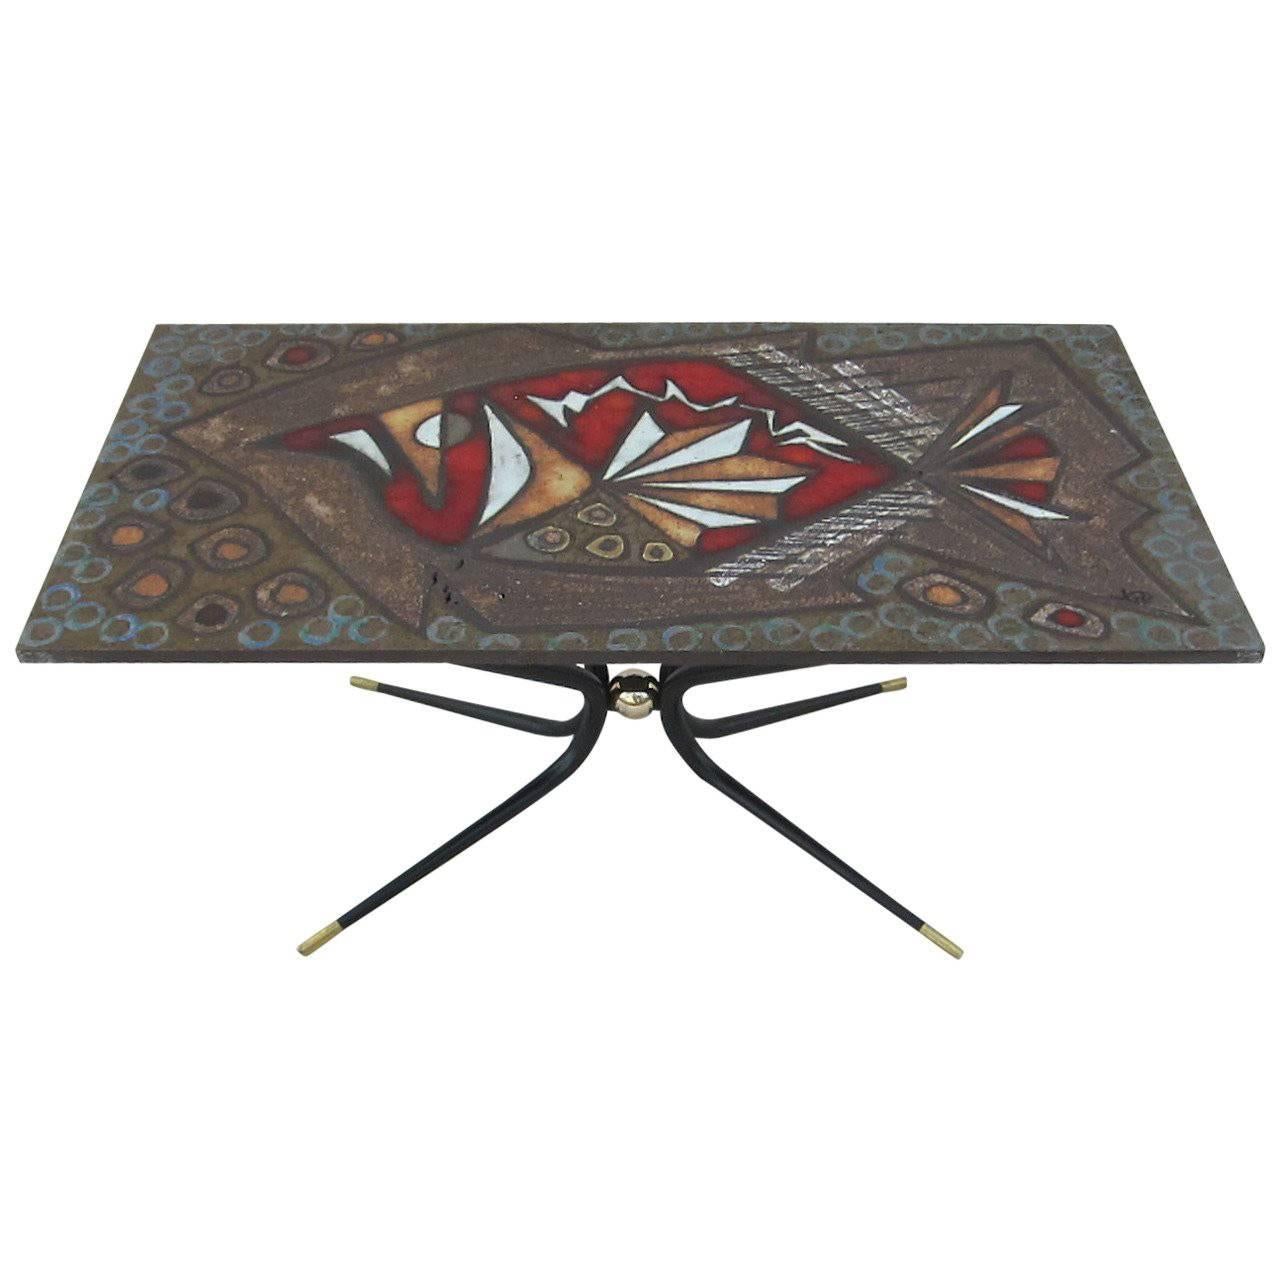 Italian Artisan Tile Table in the Style of Gio Ponti